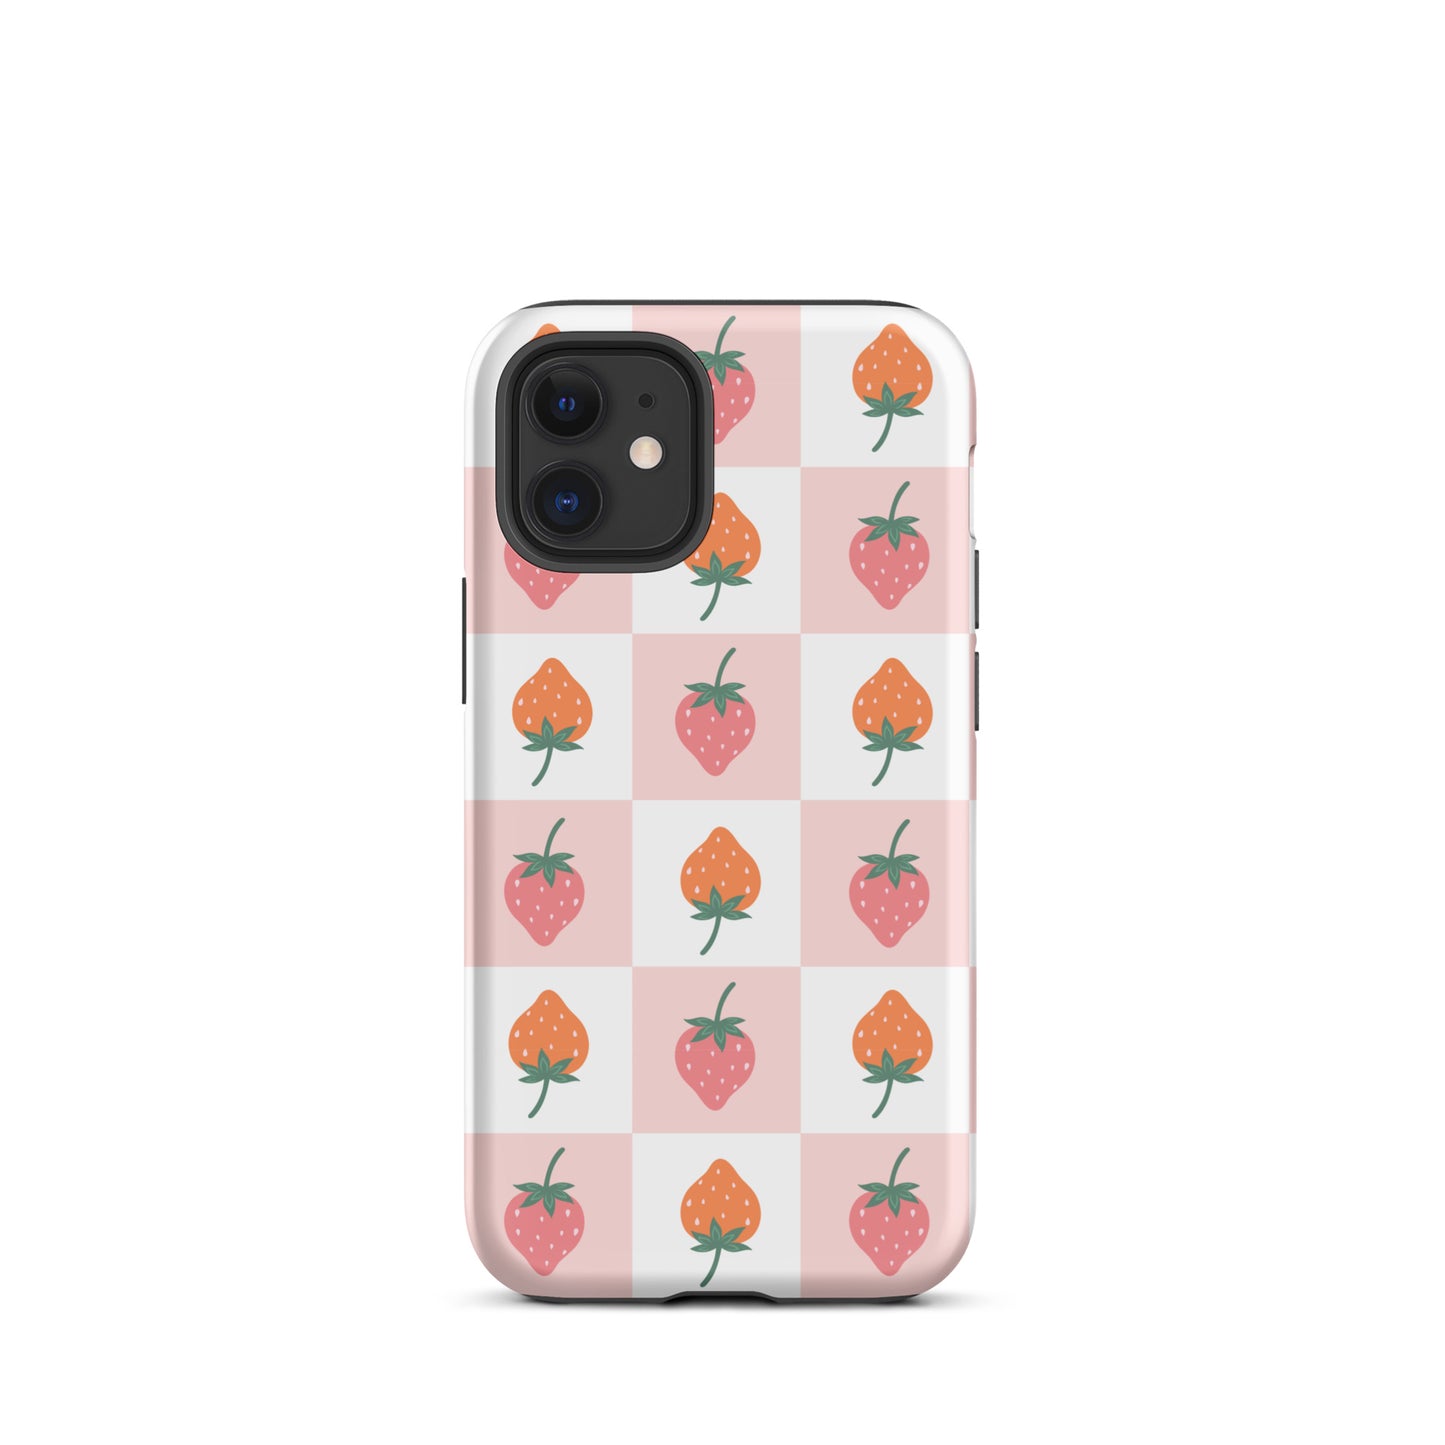 Strawberry Checkered iPhone Case iPhone 12 mini Matte